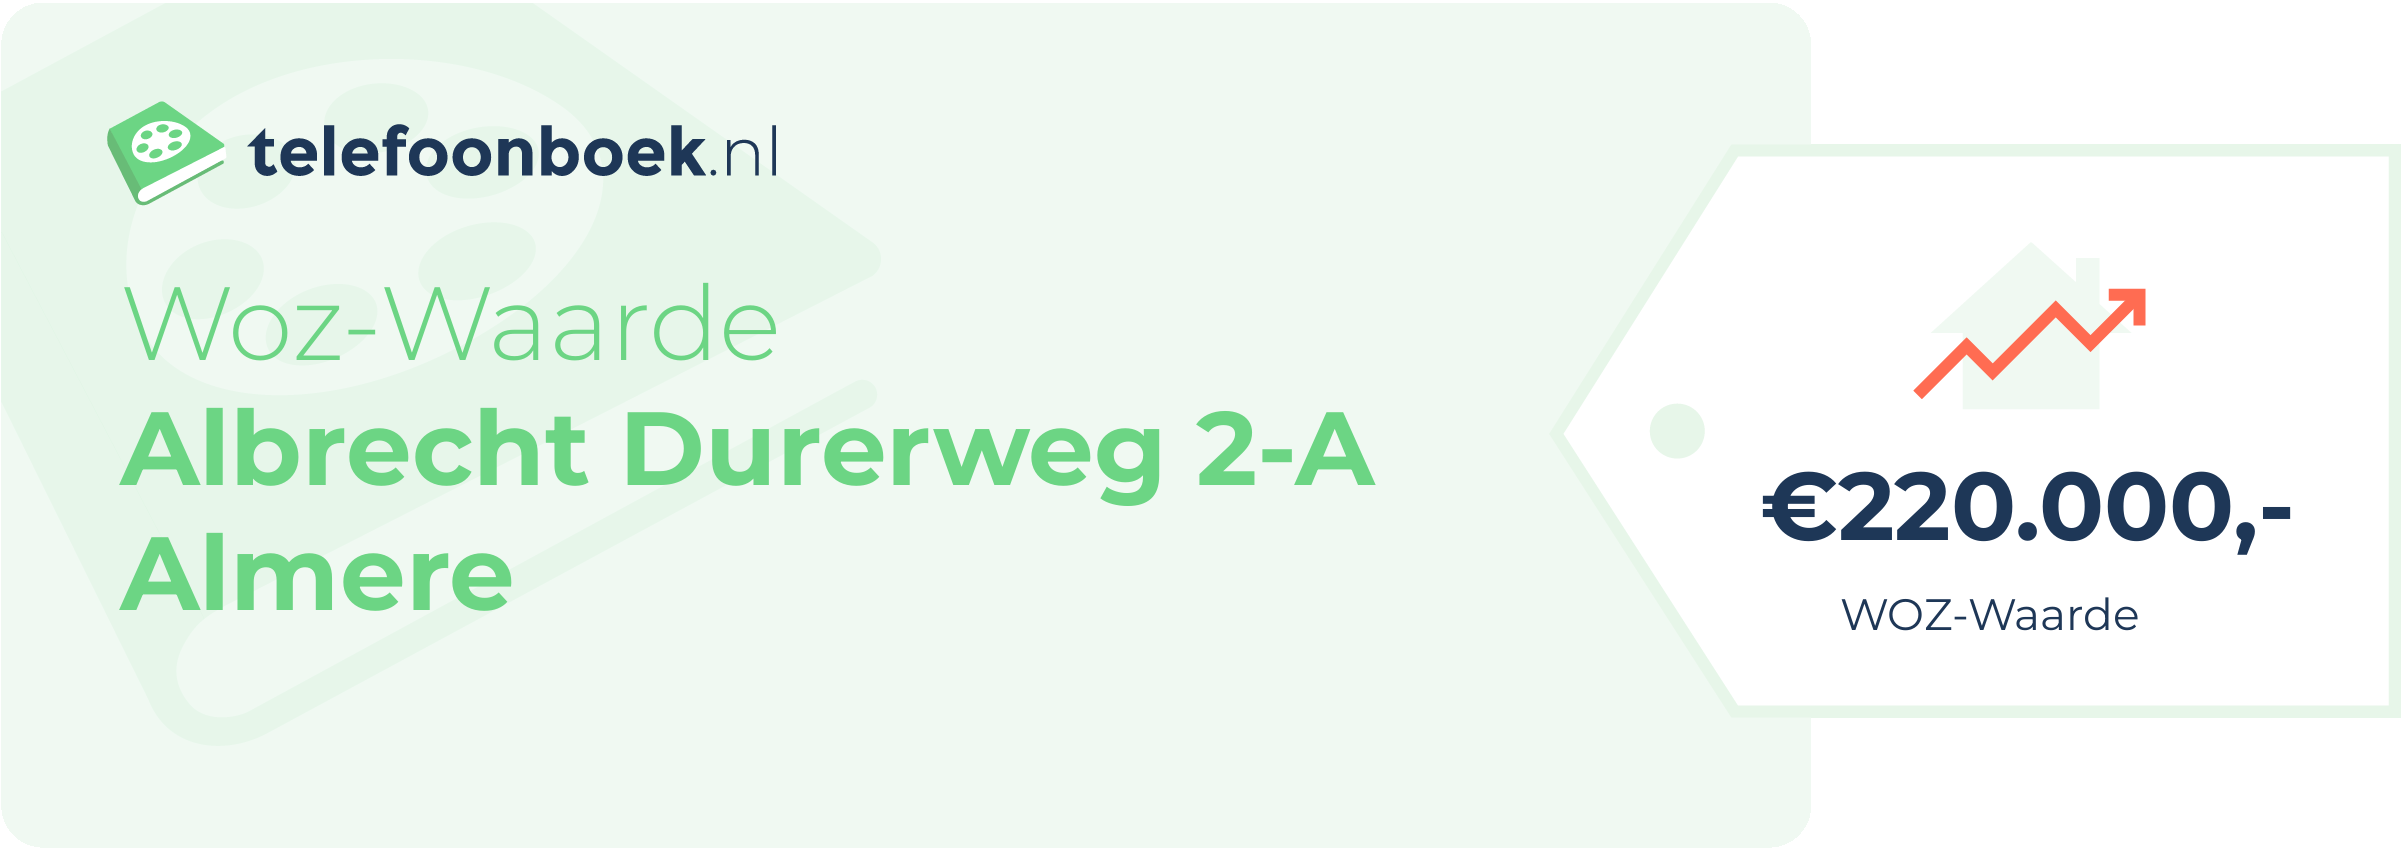 WOZ-waarde Albrecht Durerweg 2-A Almere